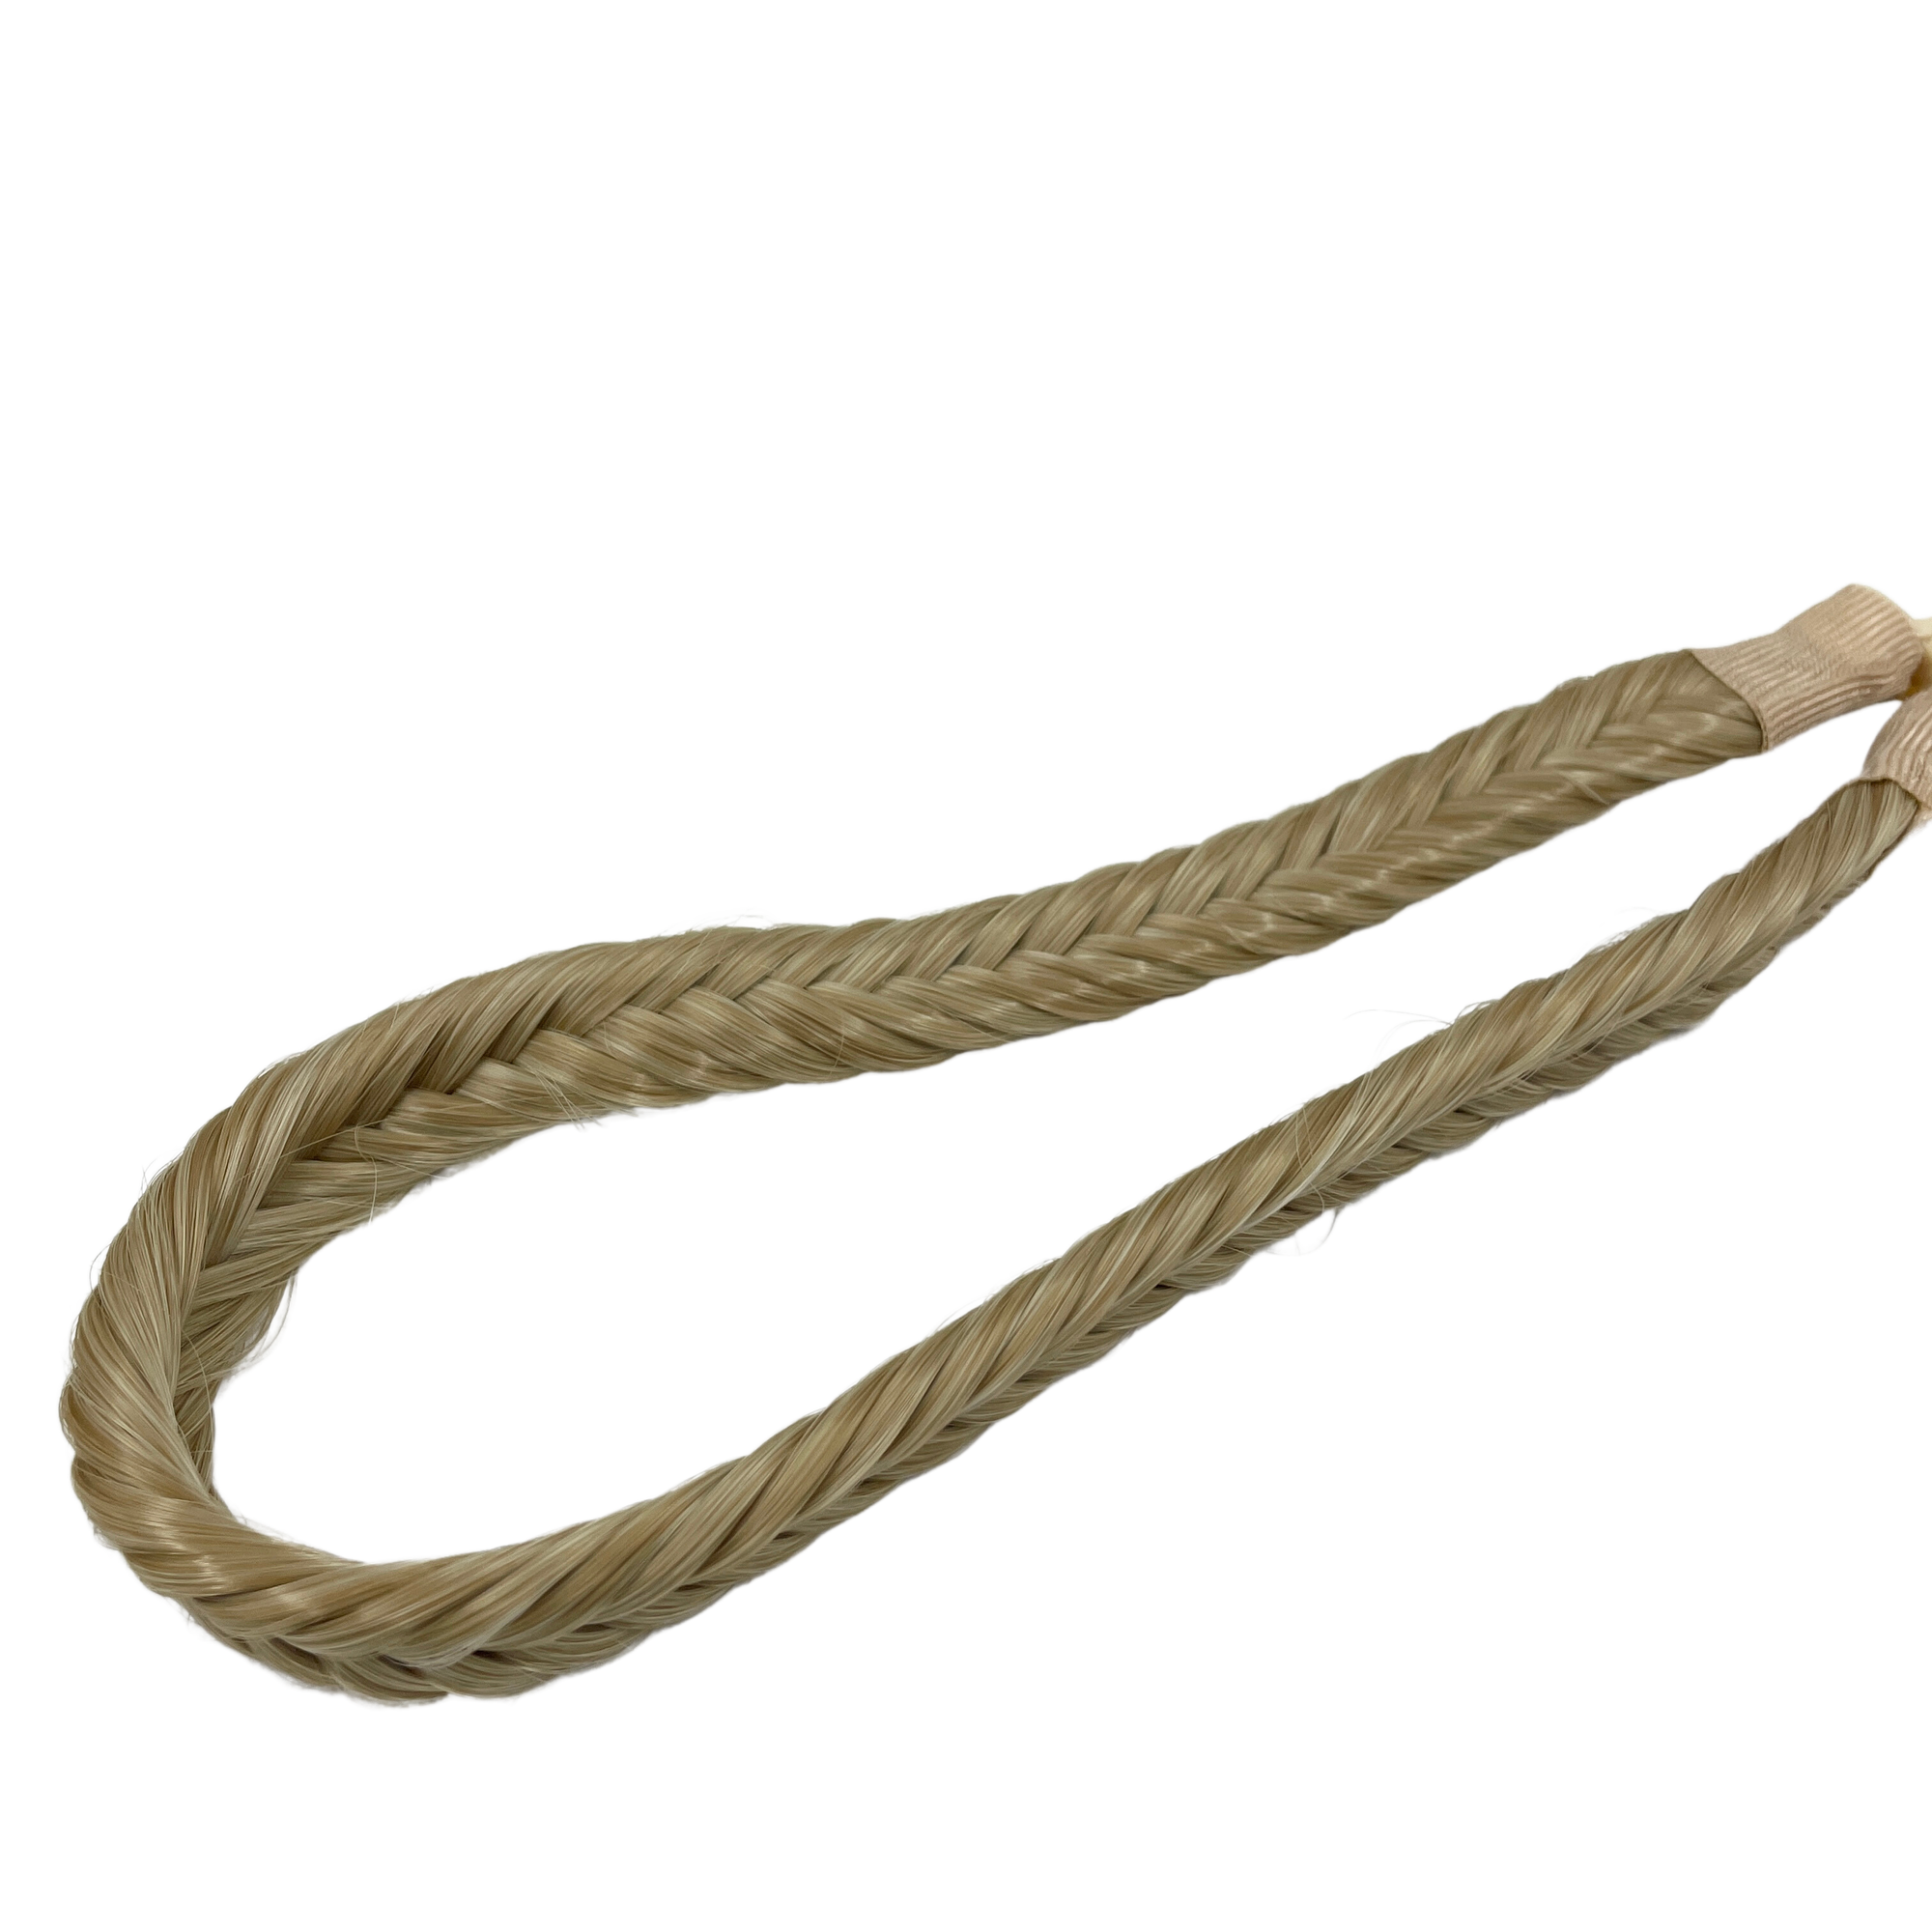 image of hair rehab london plait braid fishtail headband hairband in shade vanilla beach